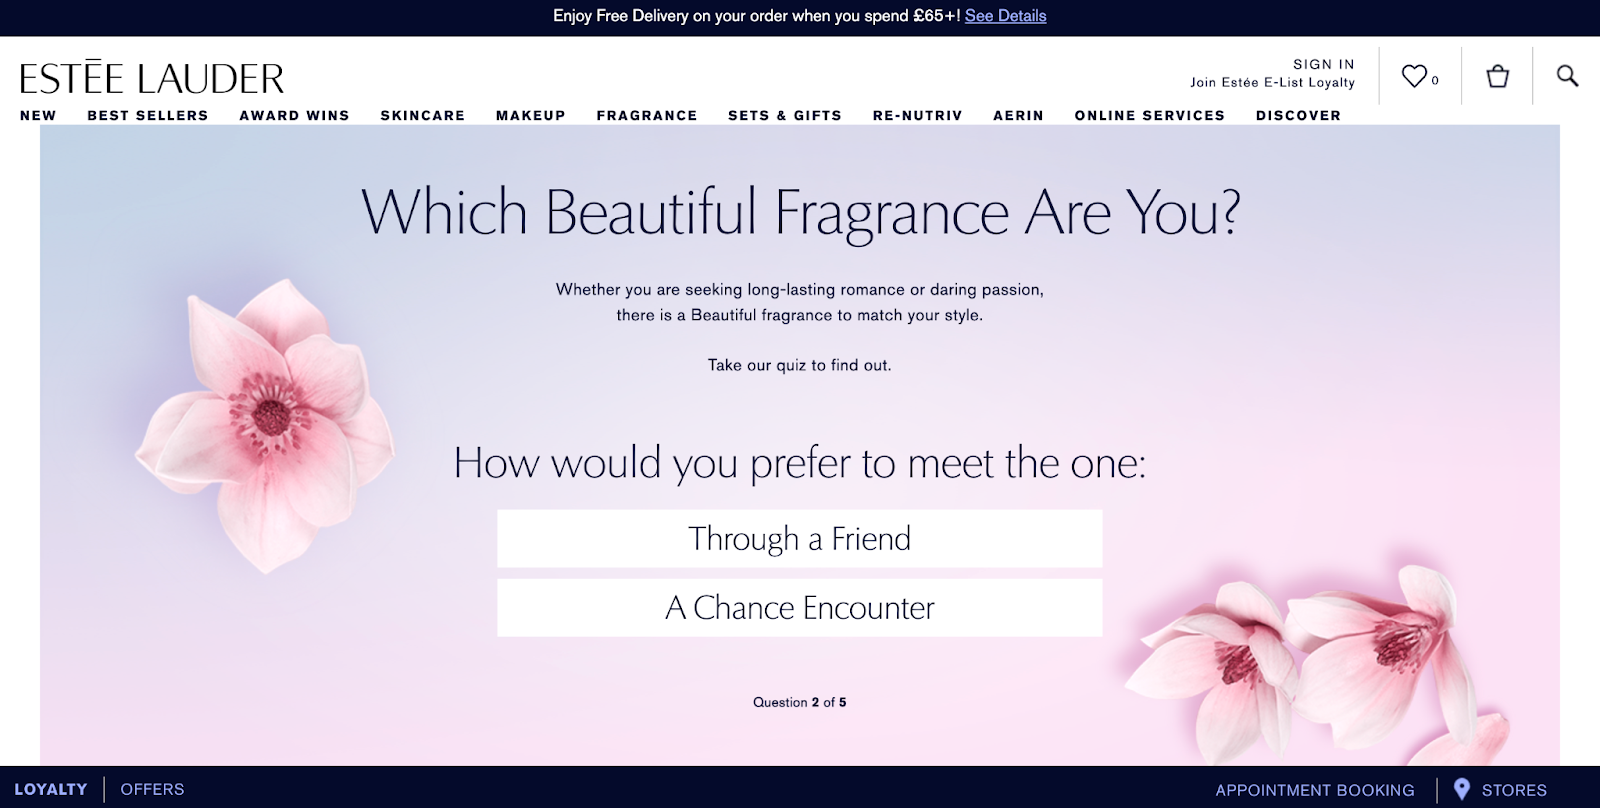 Estee Lauder Beautiful Fragrances: Zero-Party Data Collection